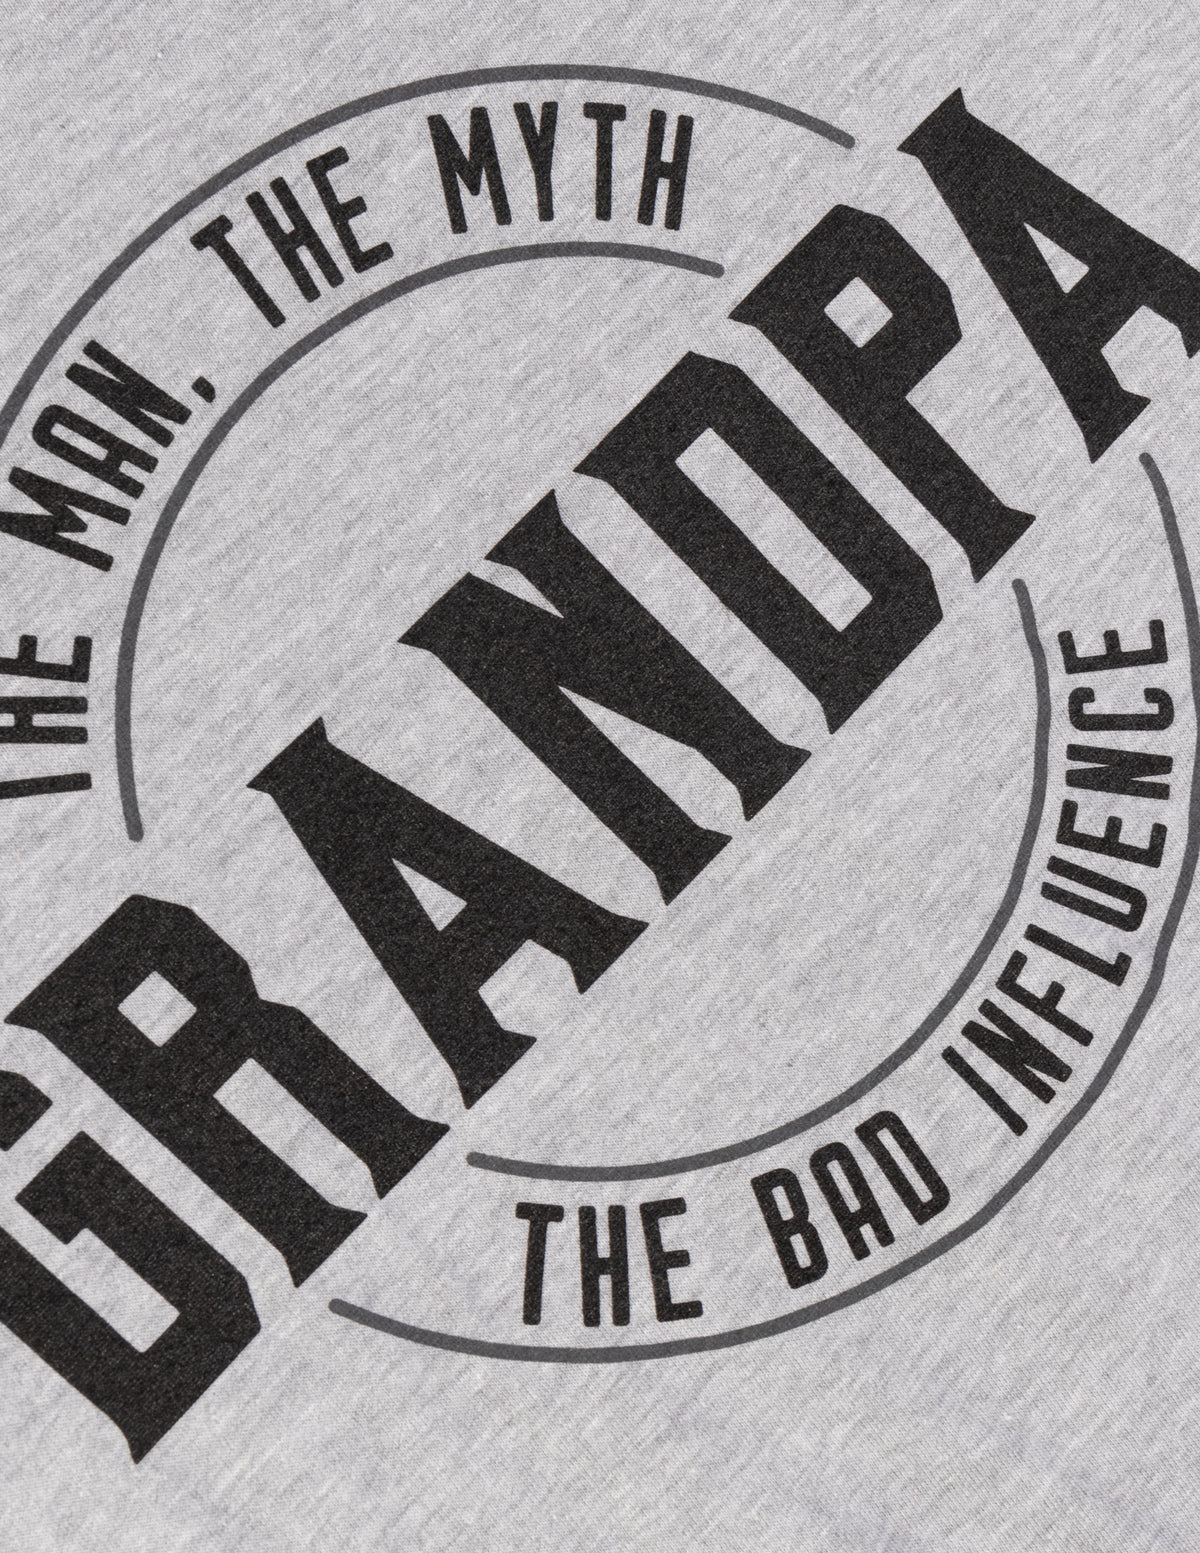 Grandpa: Man, Myth, Bad Influence | Funny Dad Joke Papa Grandfather Humor Tee Shirt for Men T-Shirt